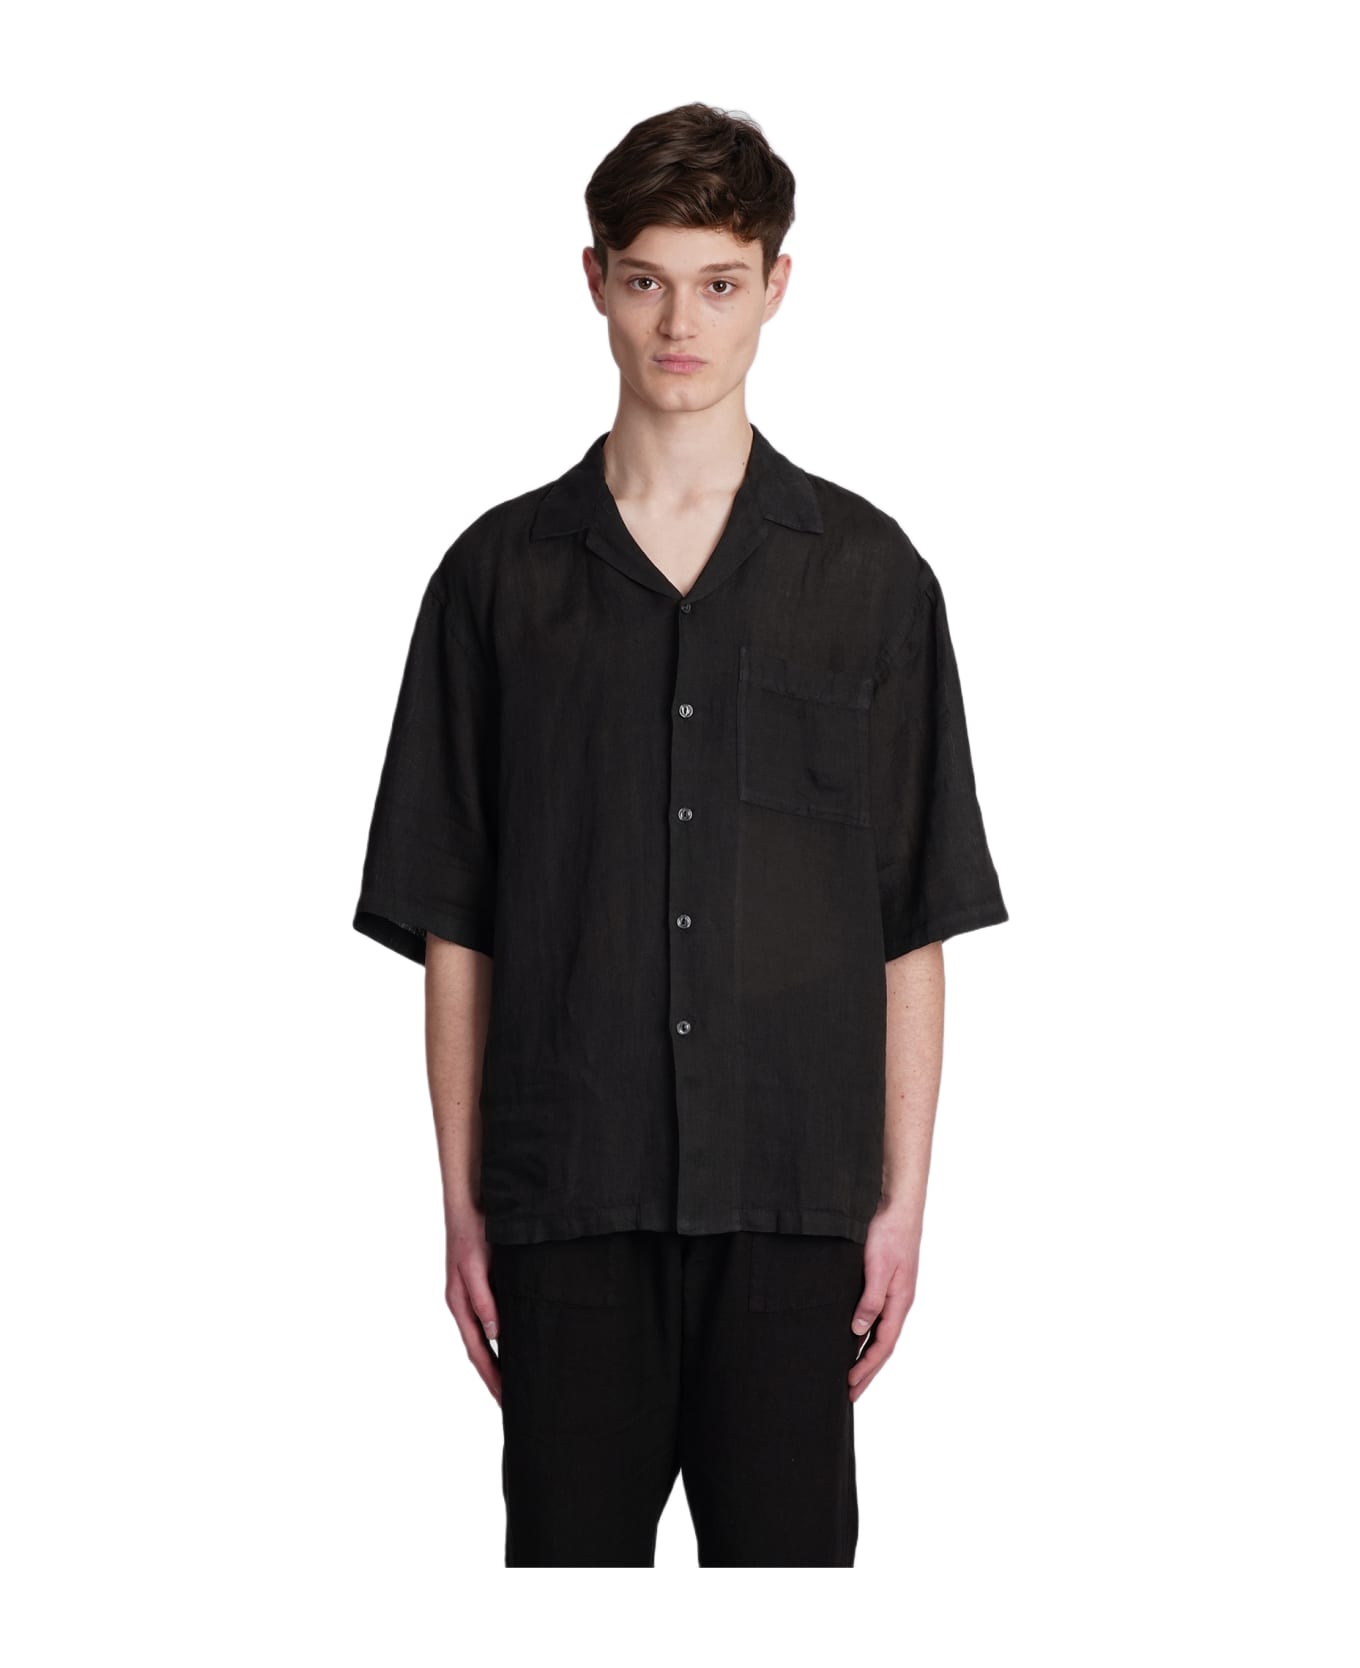 120% Lino Shirt In Black Linen - black